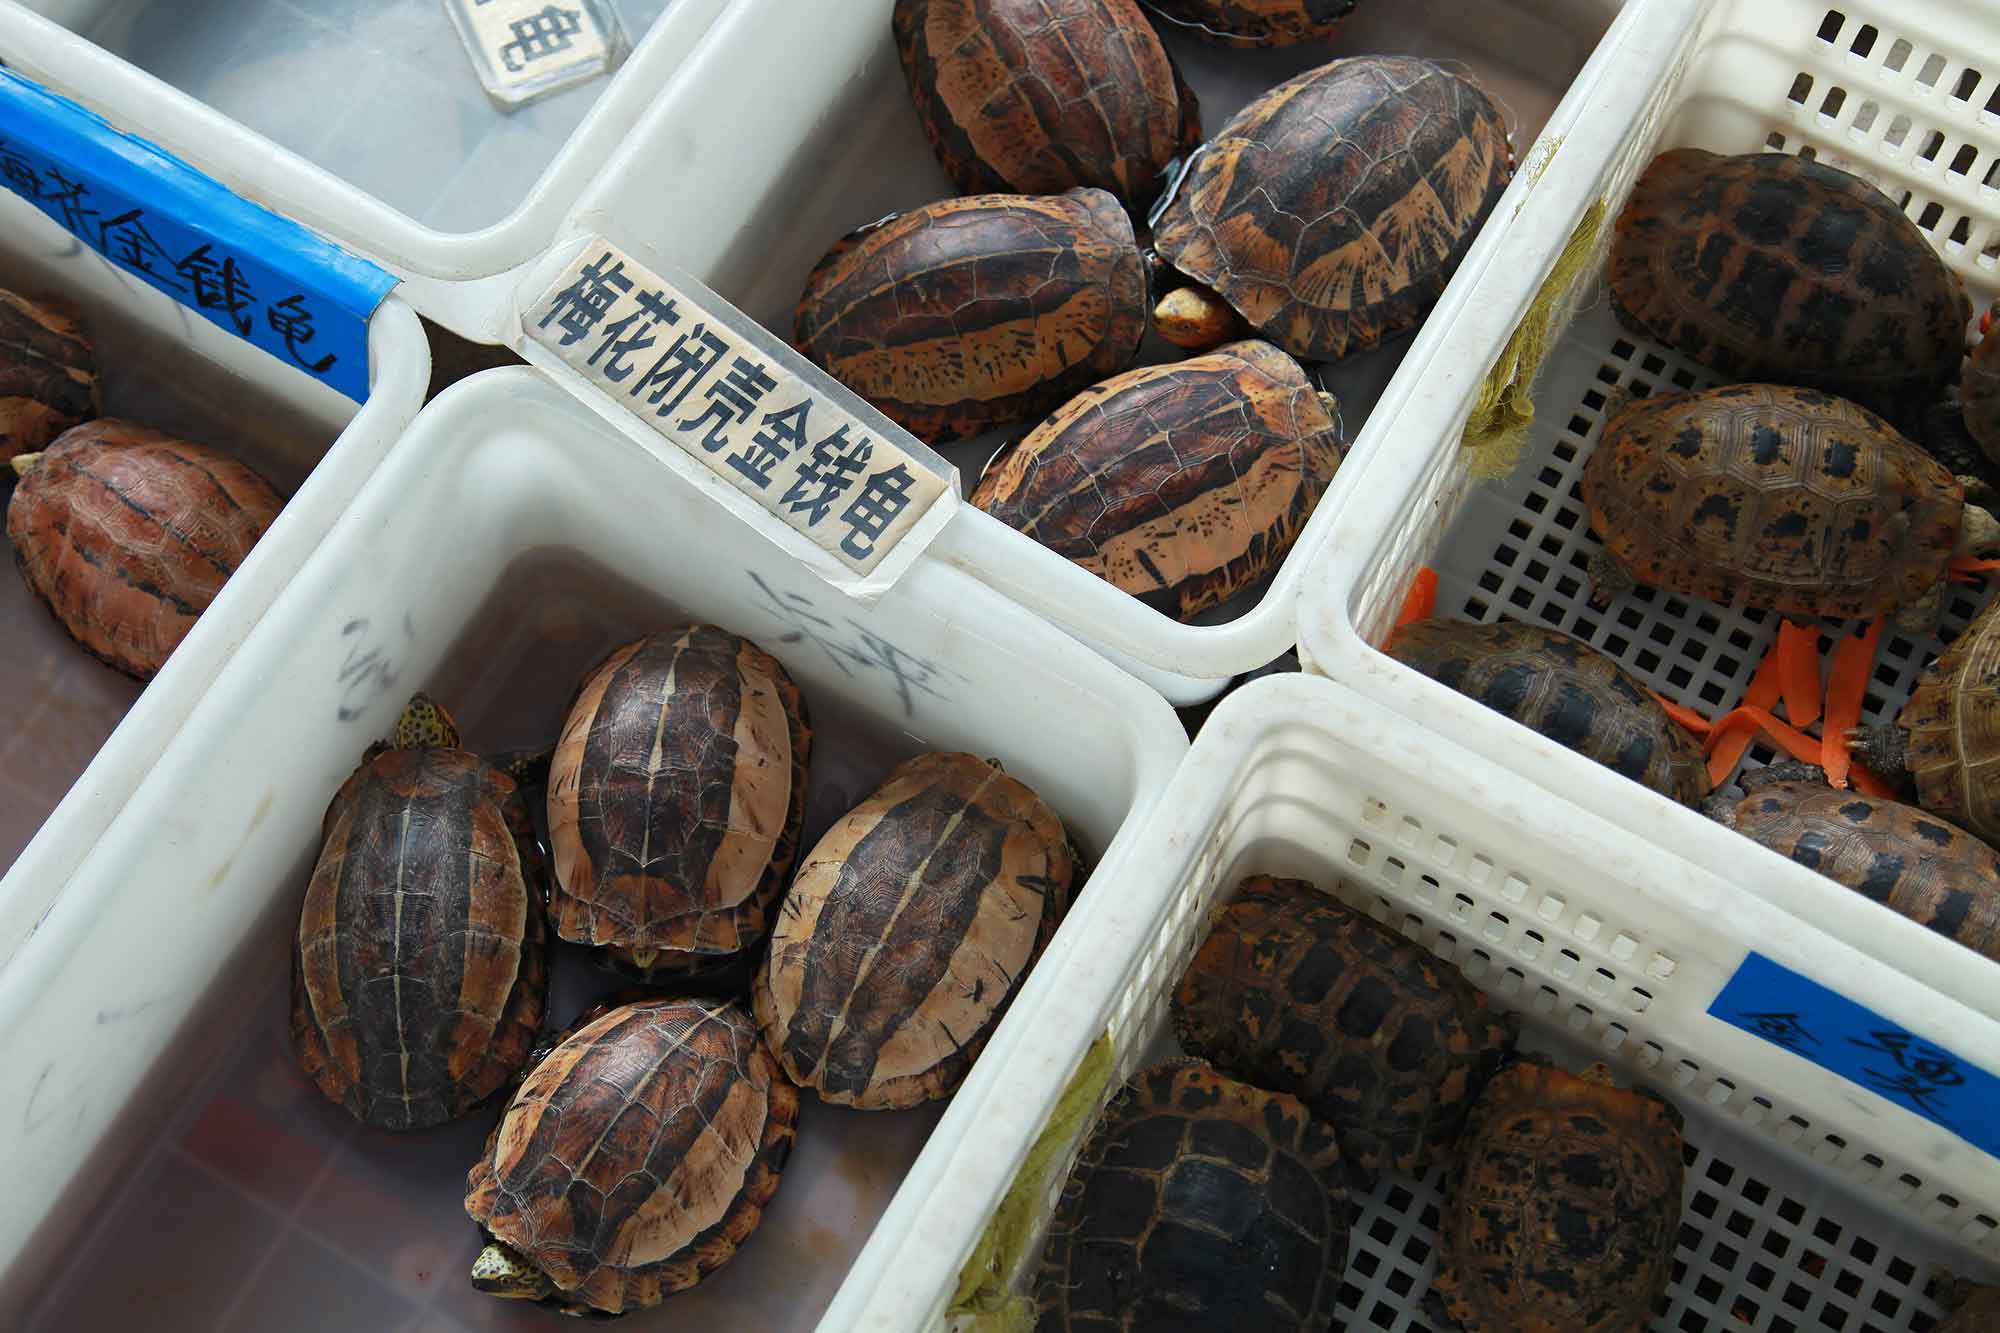 Live turtles at an animal market in Guangzhou, China. © Ulli Maier & Nisa Maier